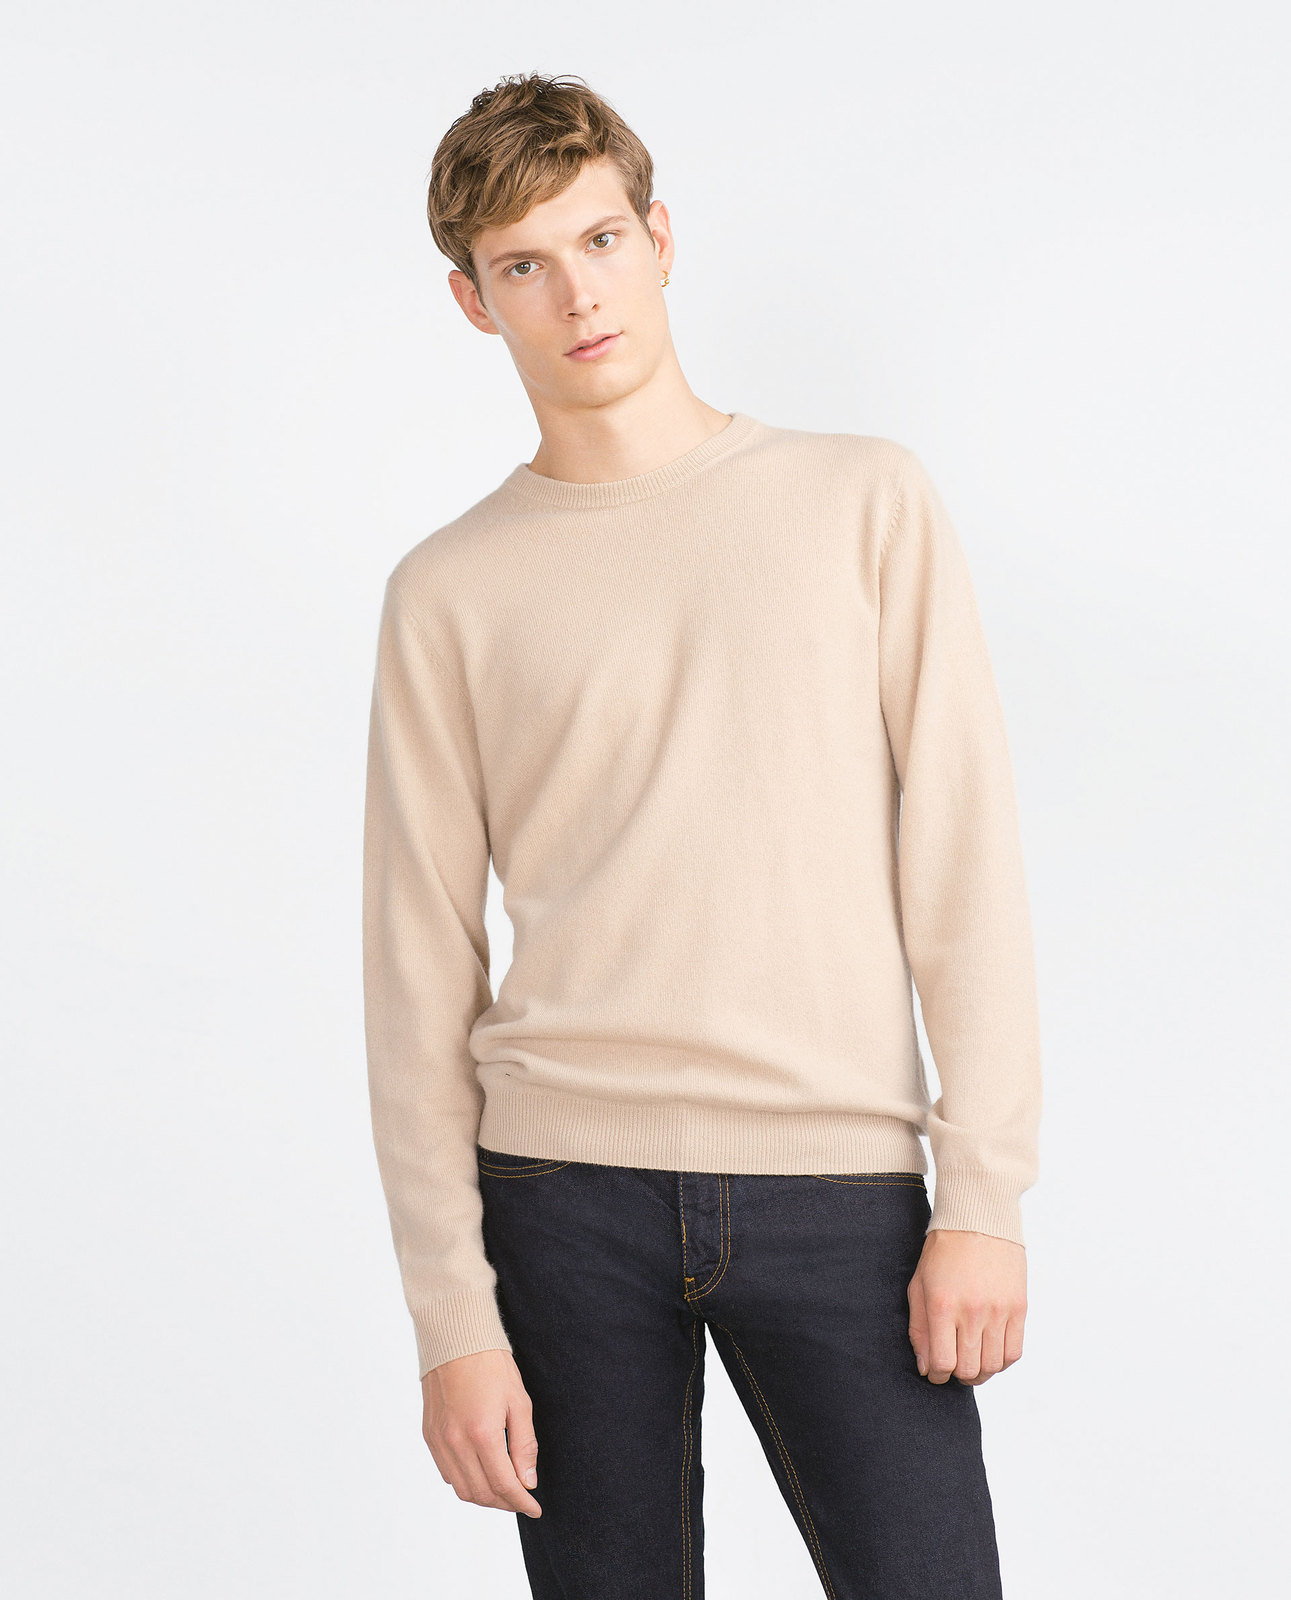 Zara férfi bézs kasmír pulóver 2015.10.16 fotója